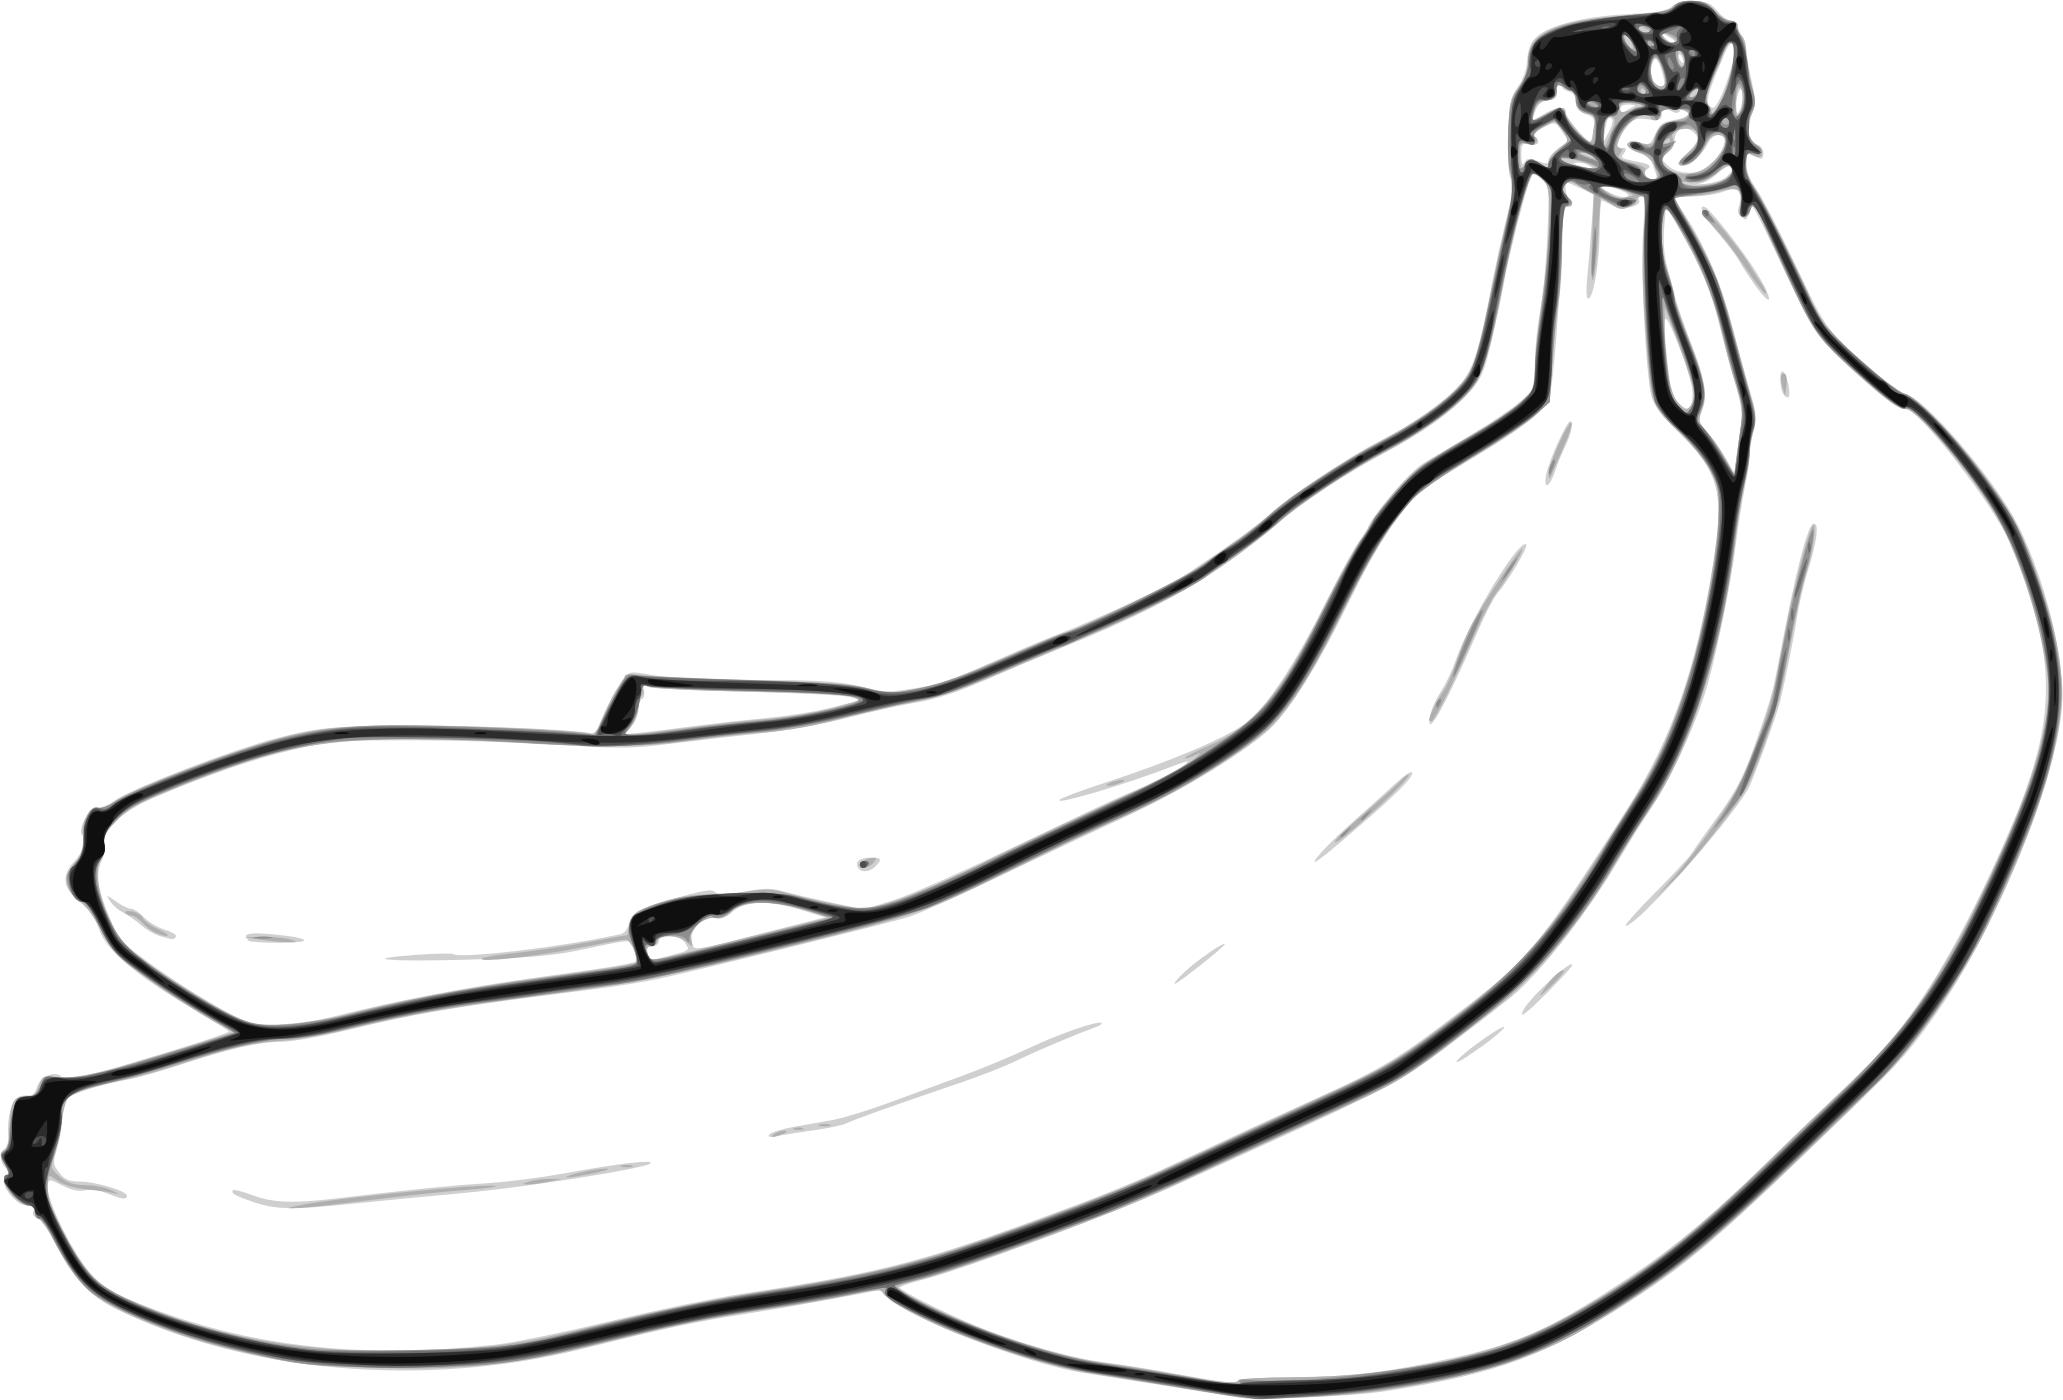 Banana Bunch Line Art png